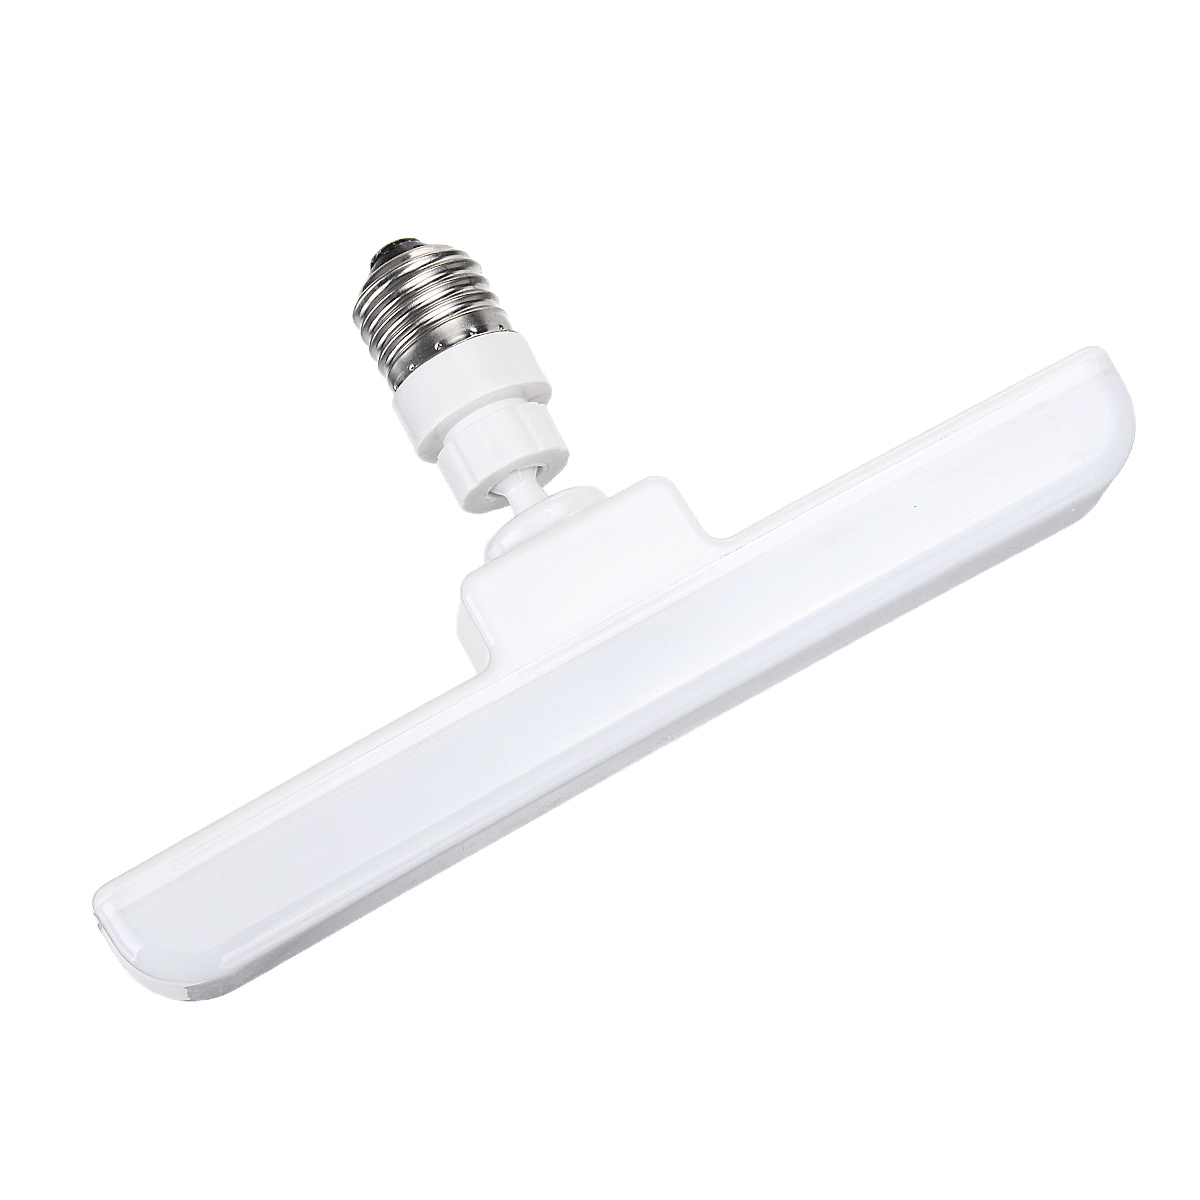 AC85-265V-12W-E27-T-shaped-Rotatable-60LED-Light-Bulb-Incandescent-Energy-Saving-Lamp-for-Home-Decor-1544168-2